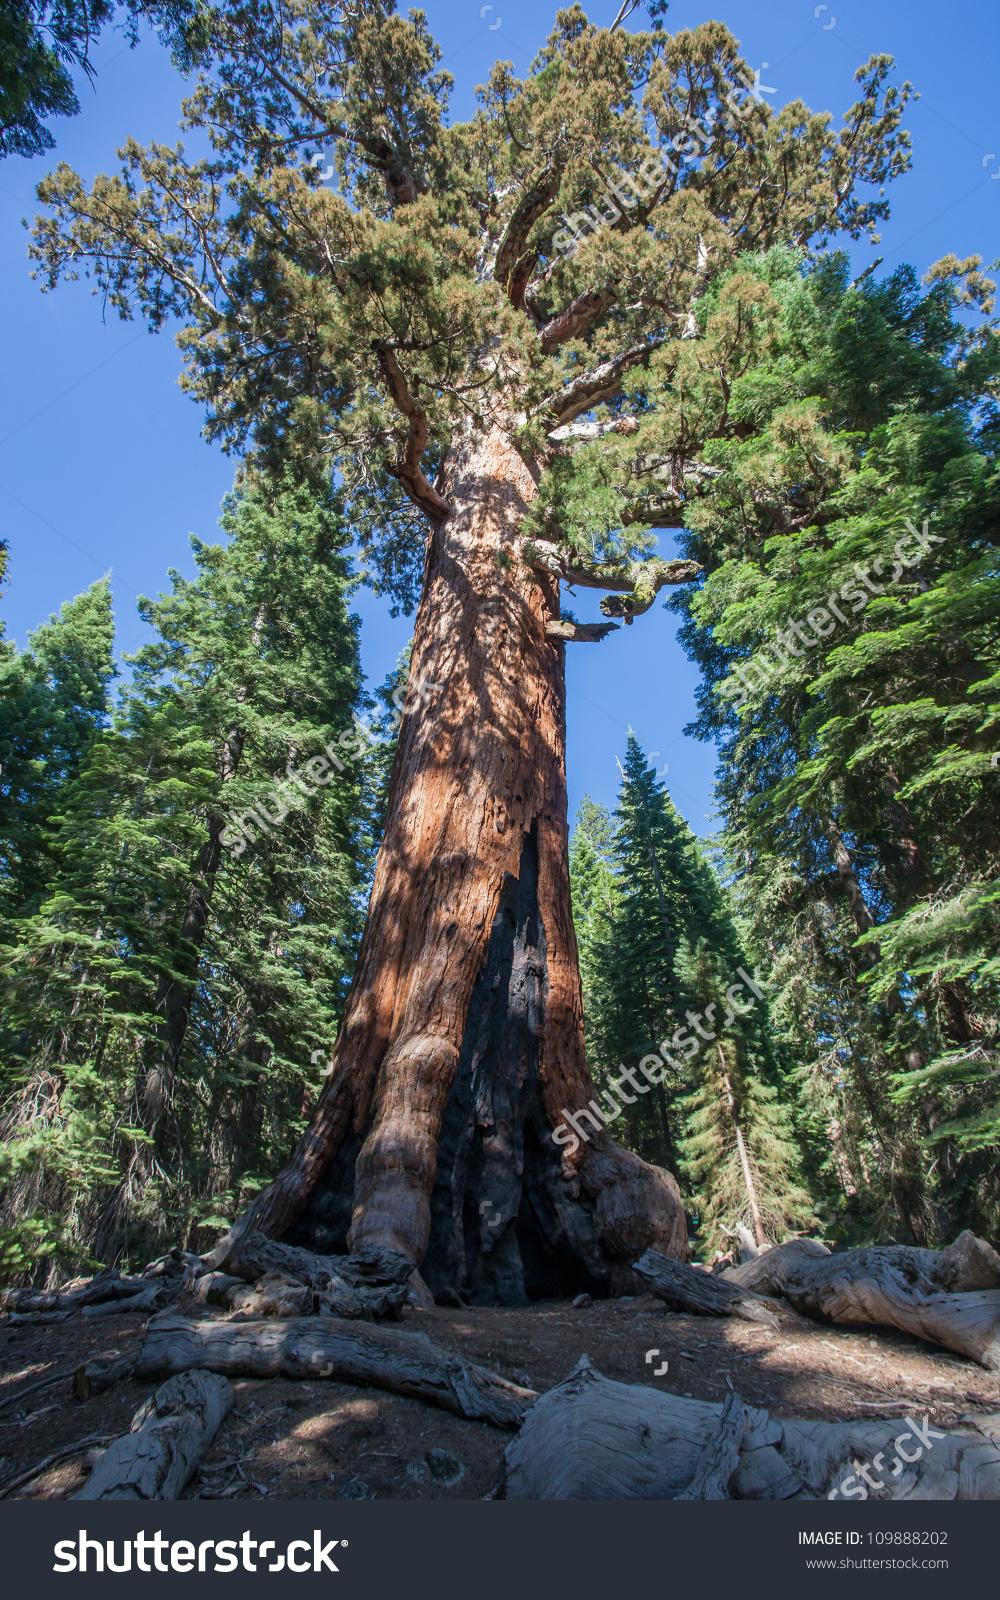 Giant Sequoia In Yosemite National Park Stock Photo 109888202.